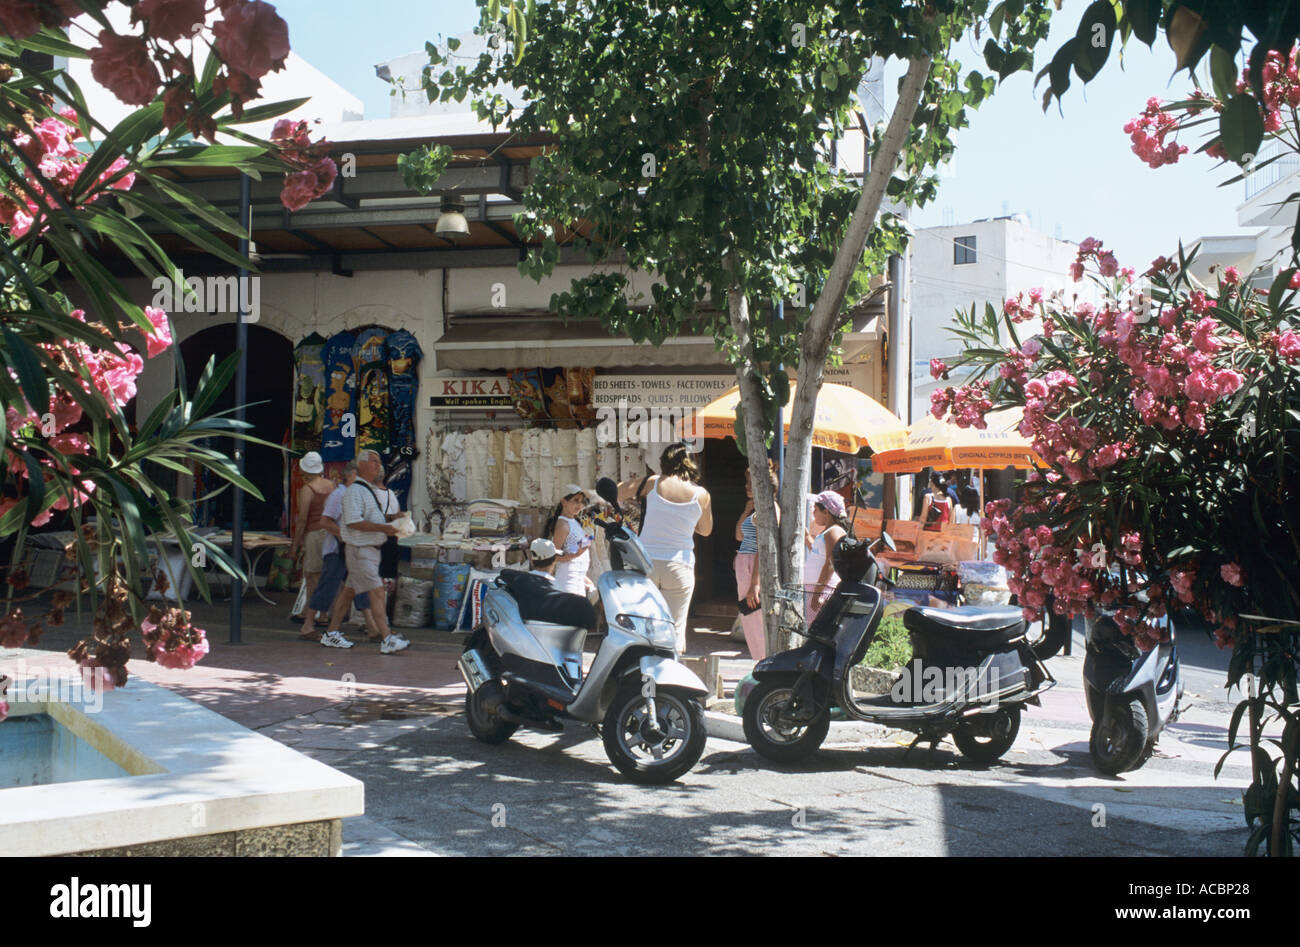 Pano Paphos town market scene Stock Photo: 4278823 - Alamy